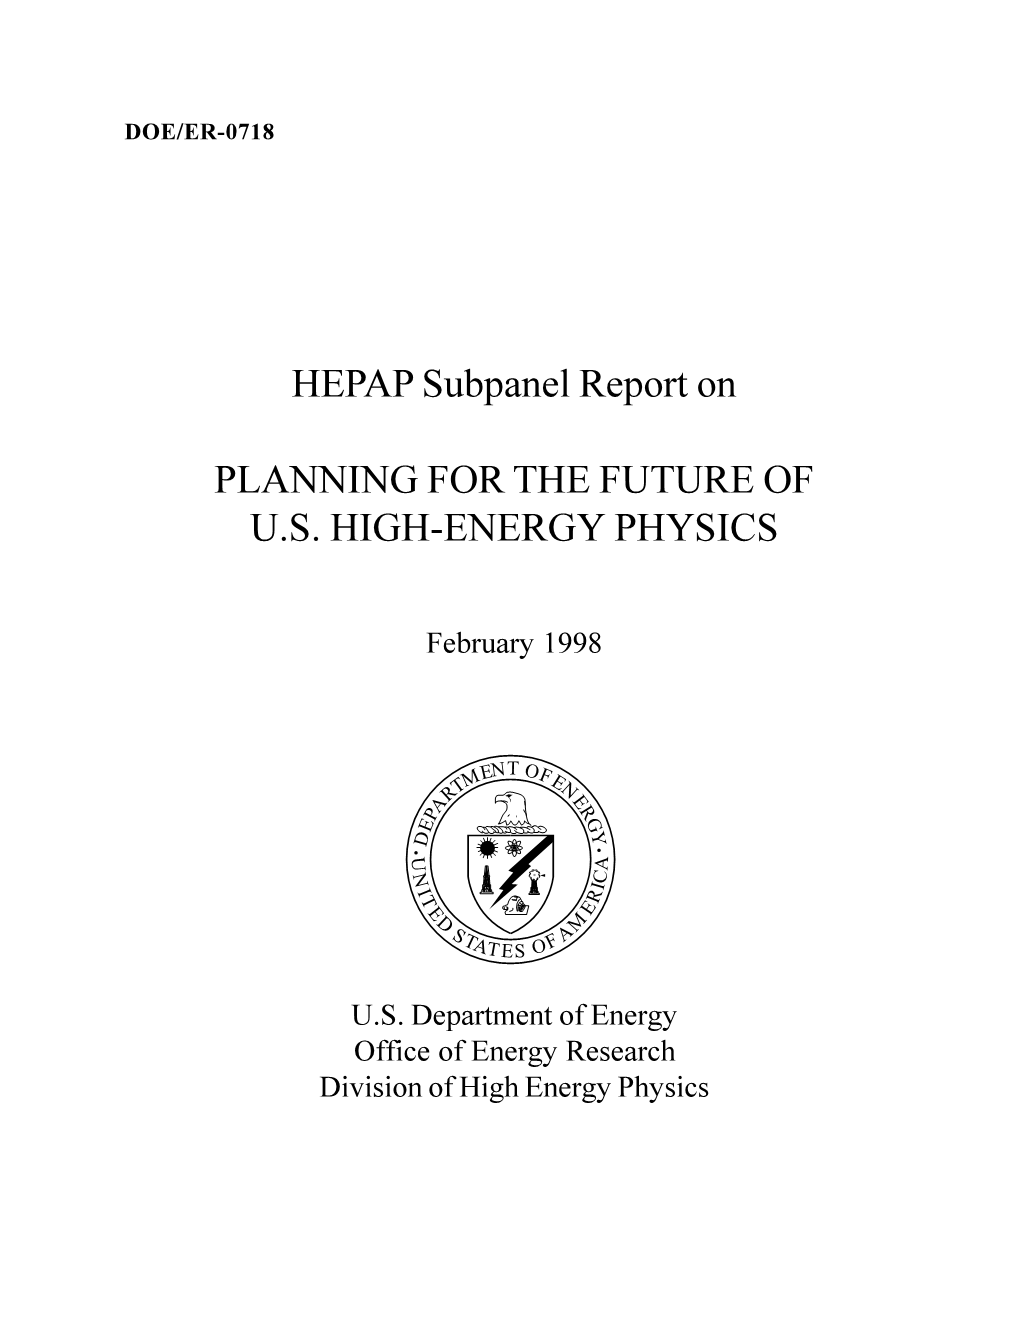 High Energy Physics Subpanel Report